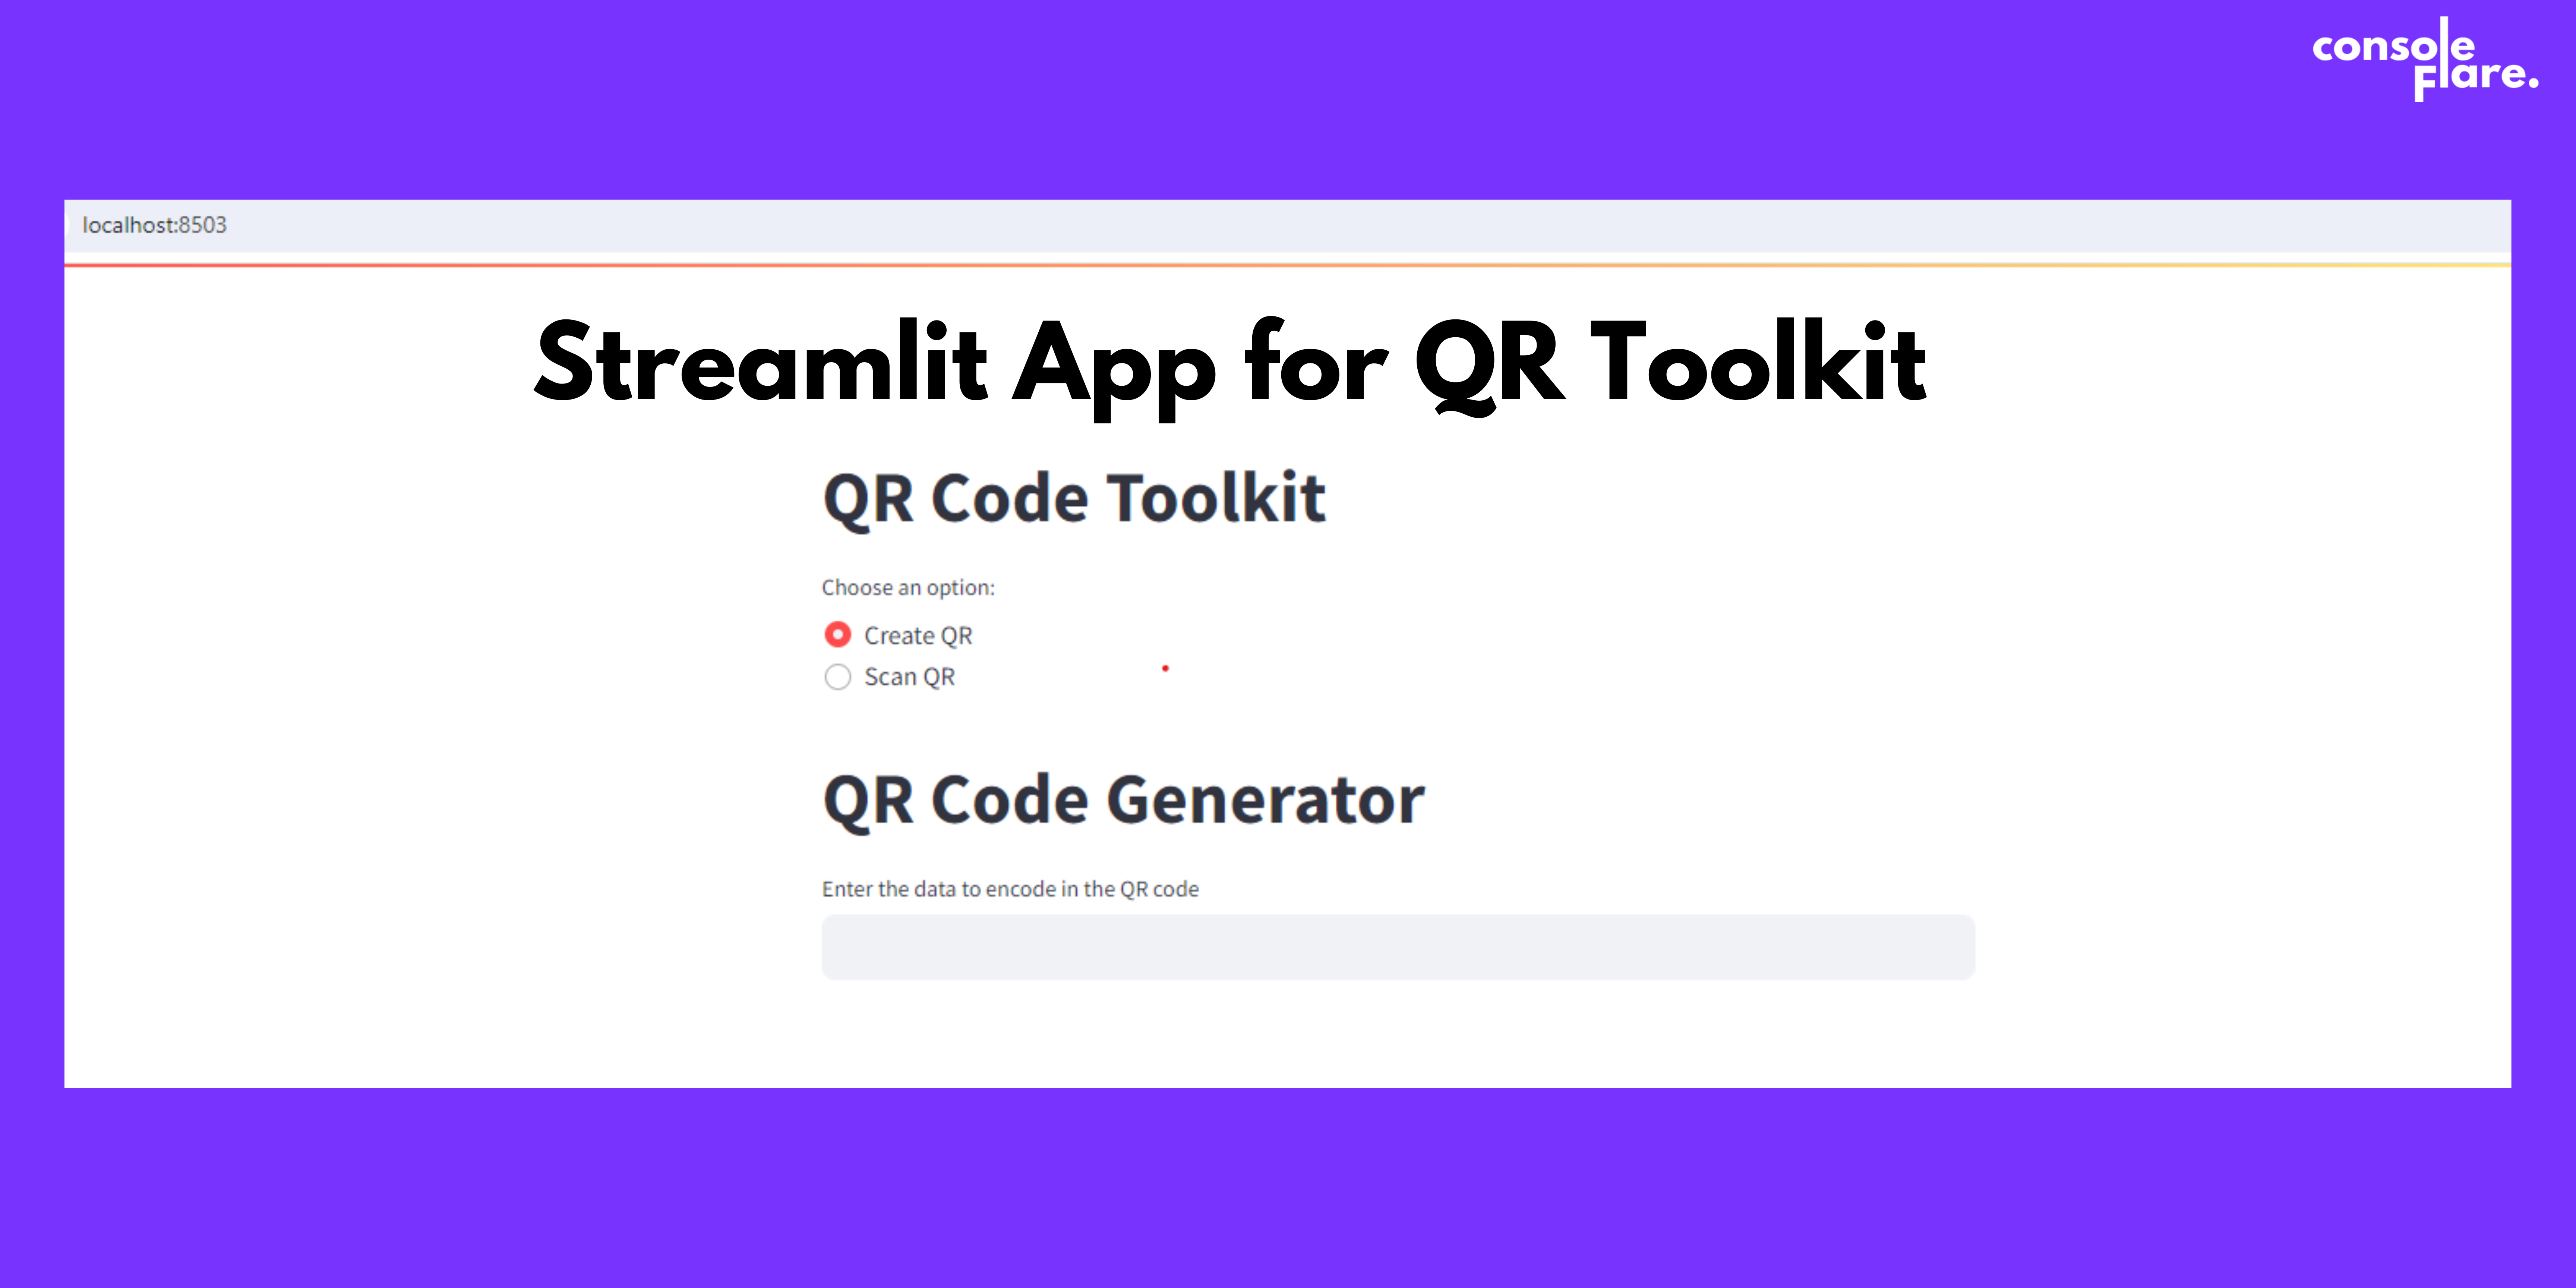 Streamlit app for QR Toolkit in 6 simple steps